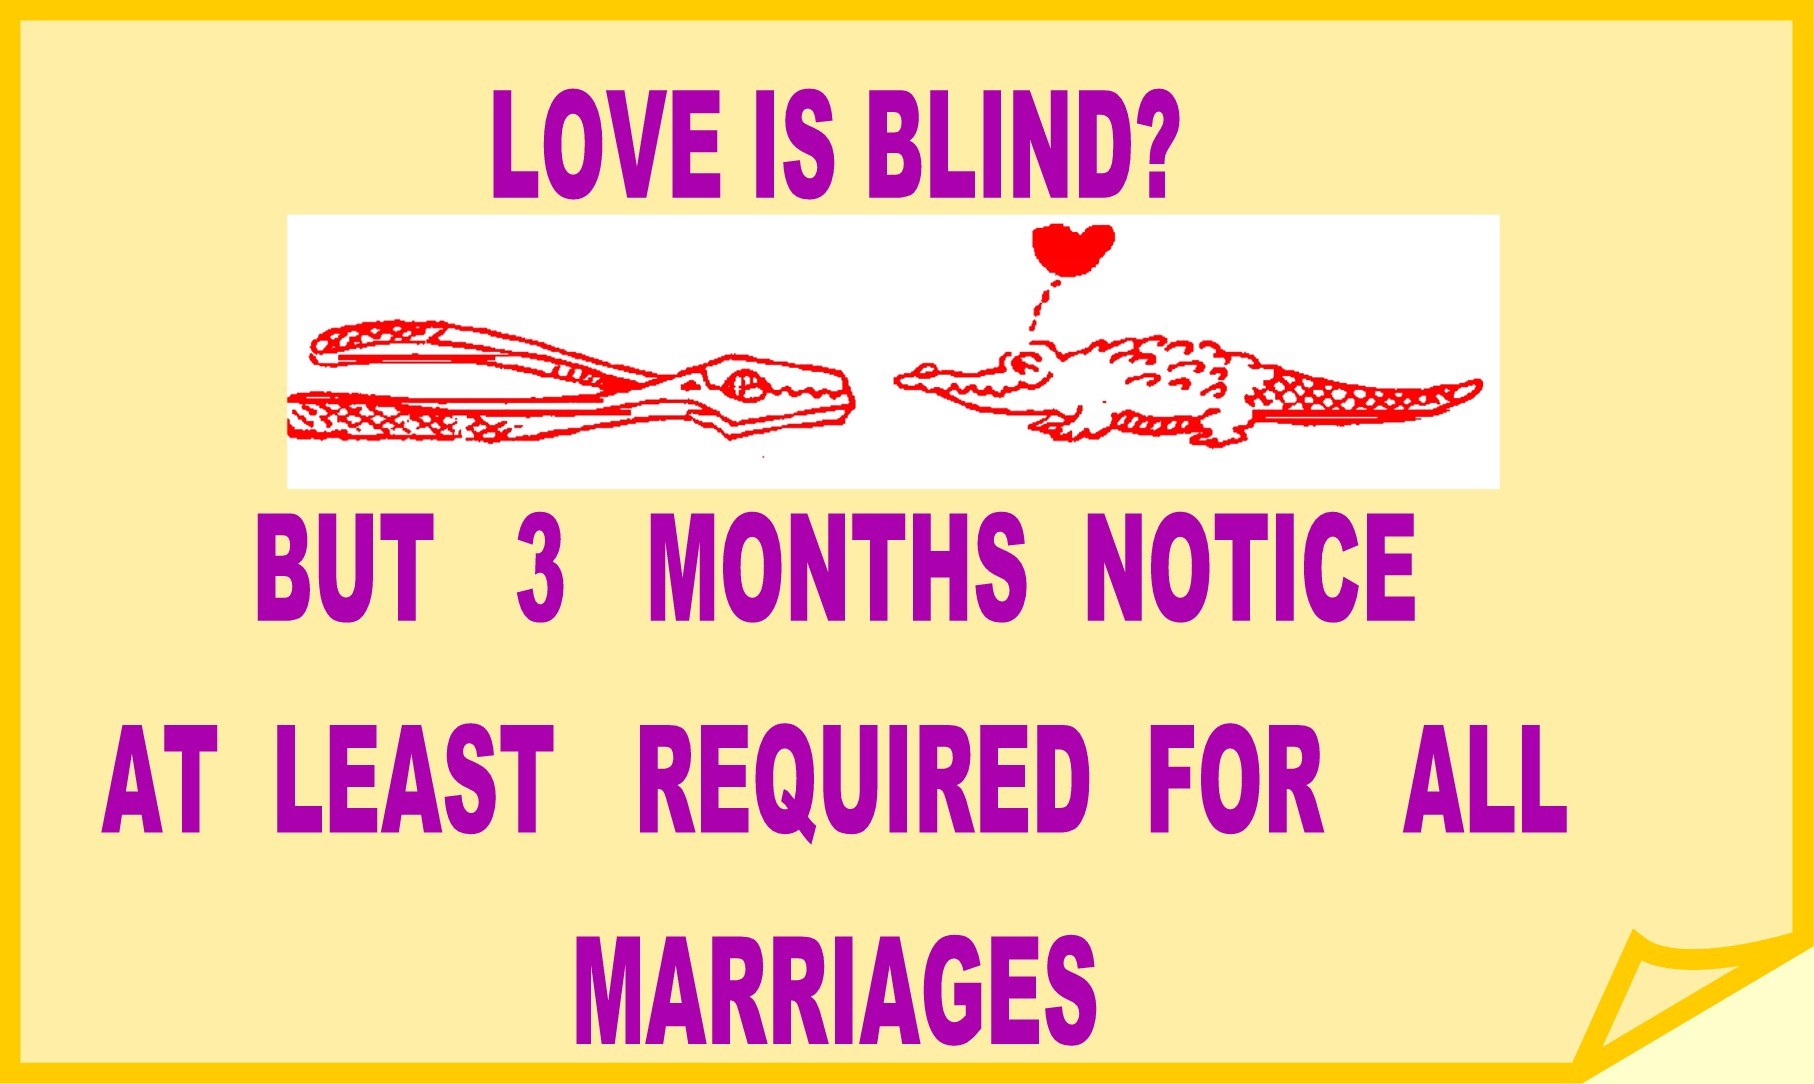 Marriage - 3 Months Notice ver2